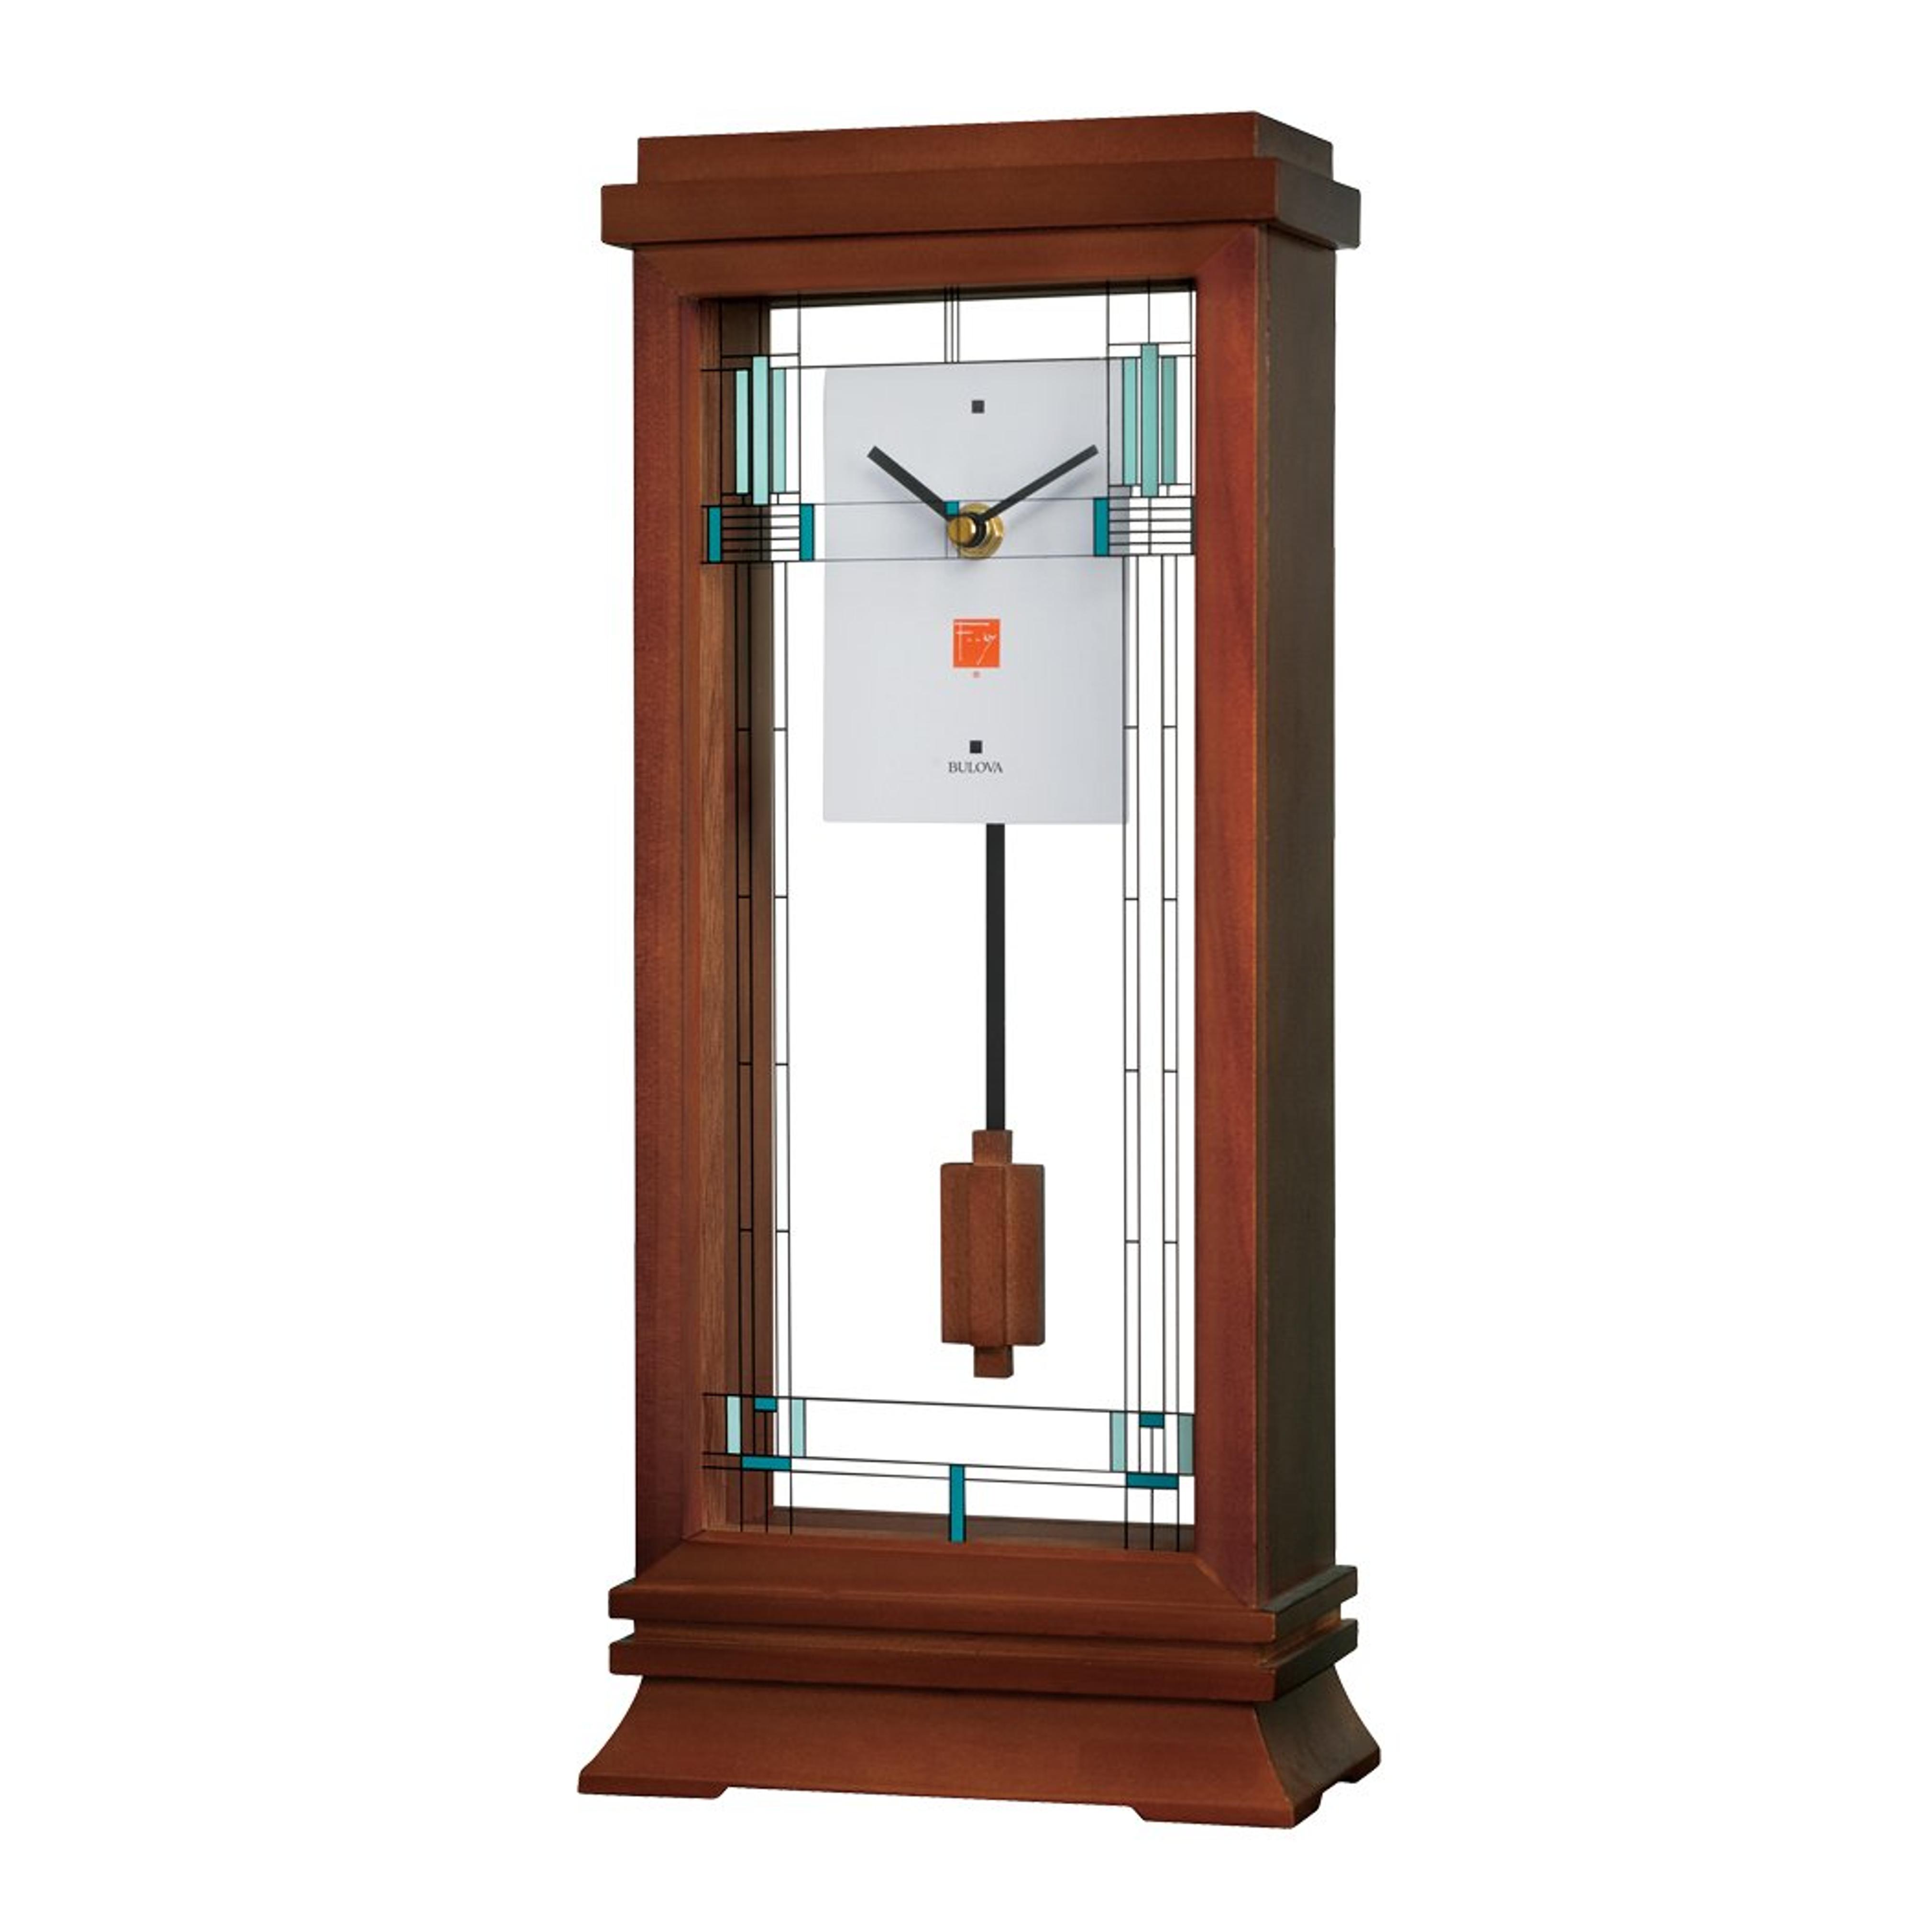 Bulova B1839 Willits Frank Lloyd Wright Mantel Clock, 14", Walnut Finish